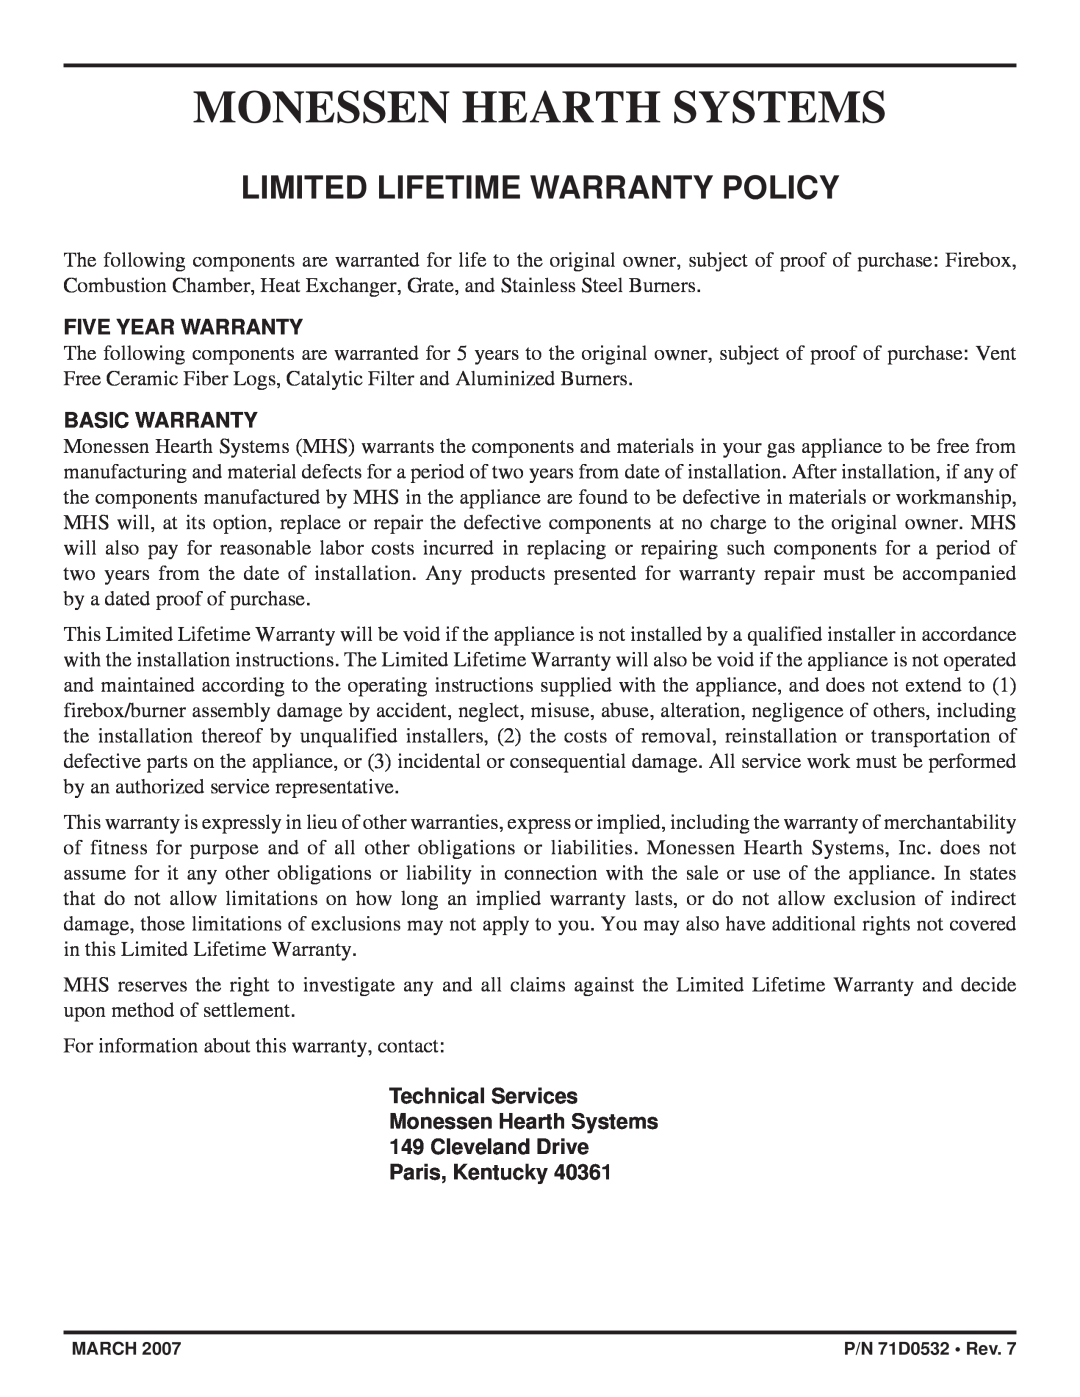 Monessen Hearth DFS32NVC Limited Lifetime Warranty Policy, Five Year Warranty, Basic Warranty, Monessen Hearth Systems 